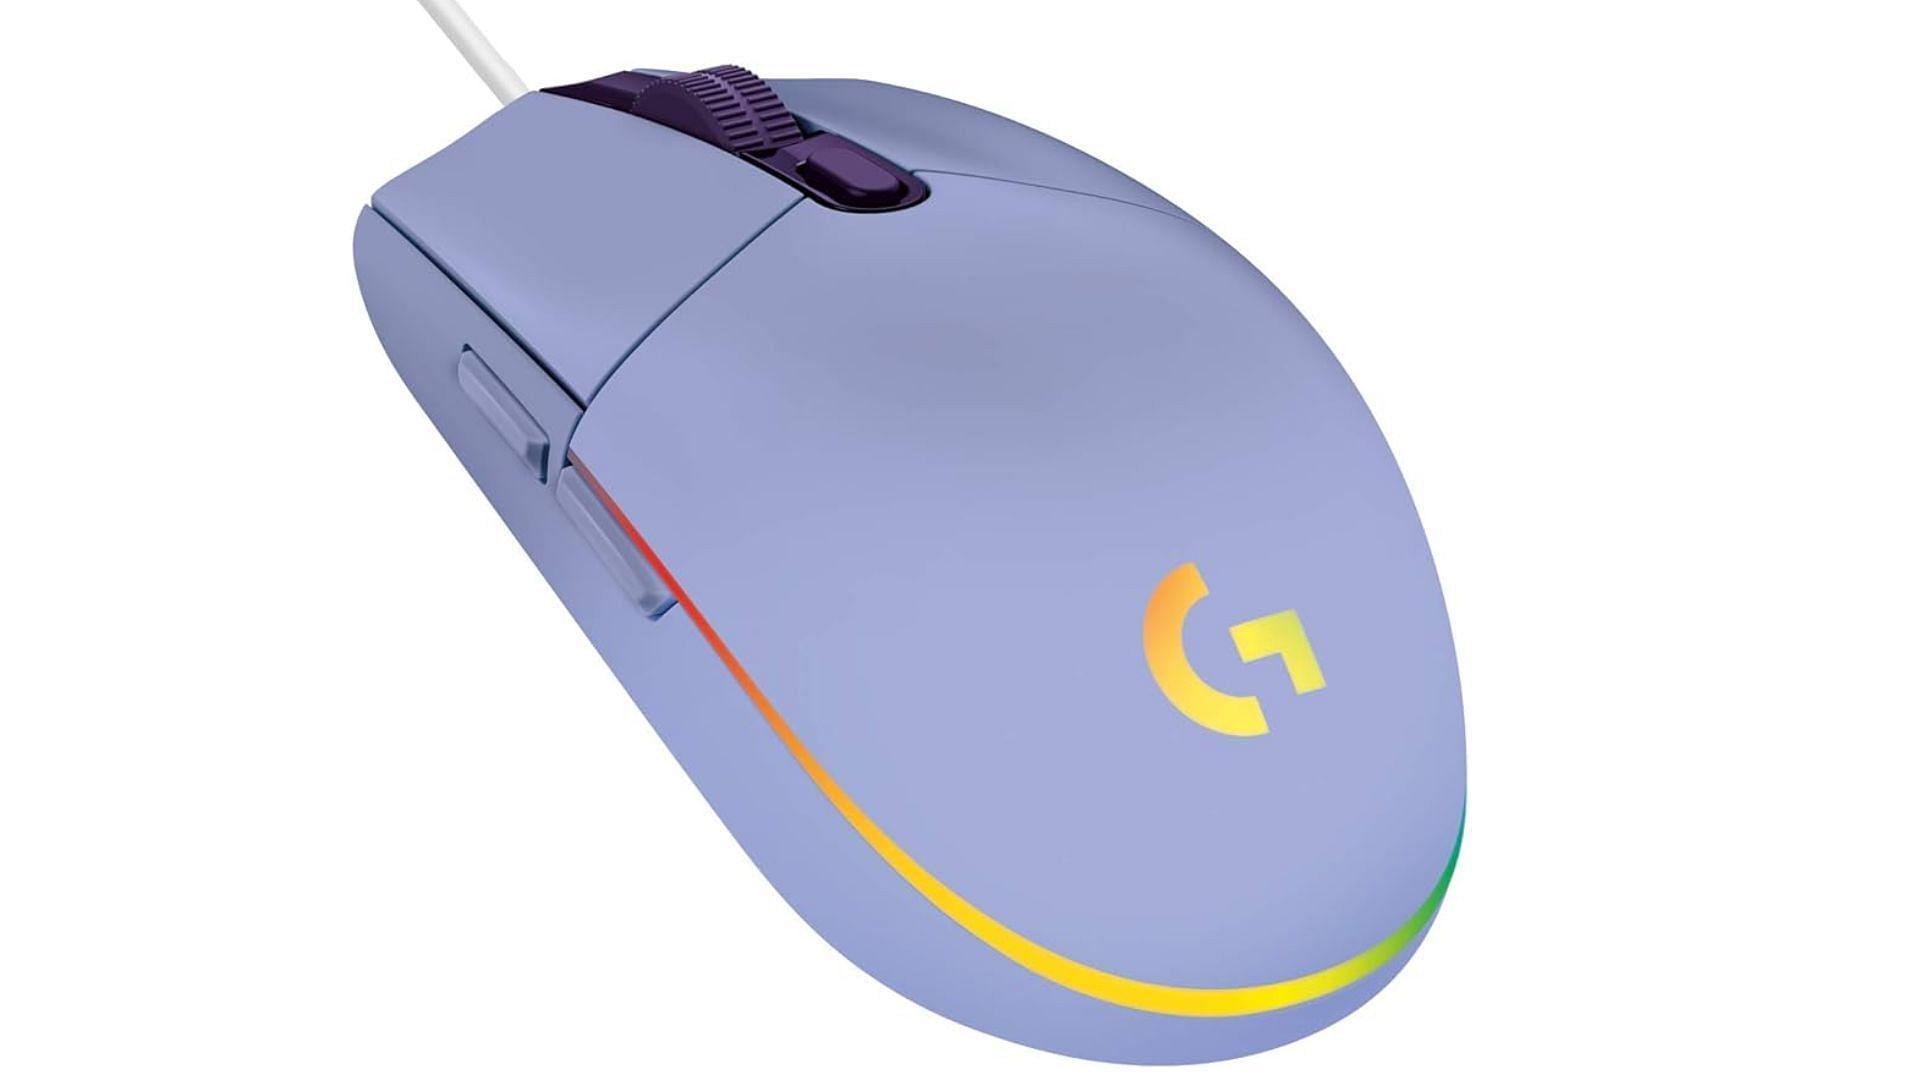 Budget-friendly gaming mouse (Image via Logitech/Amazon)